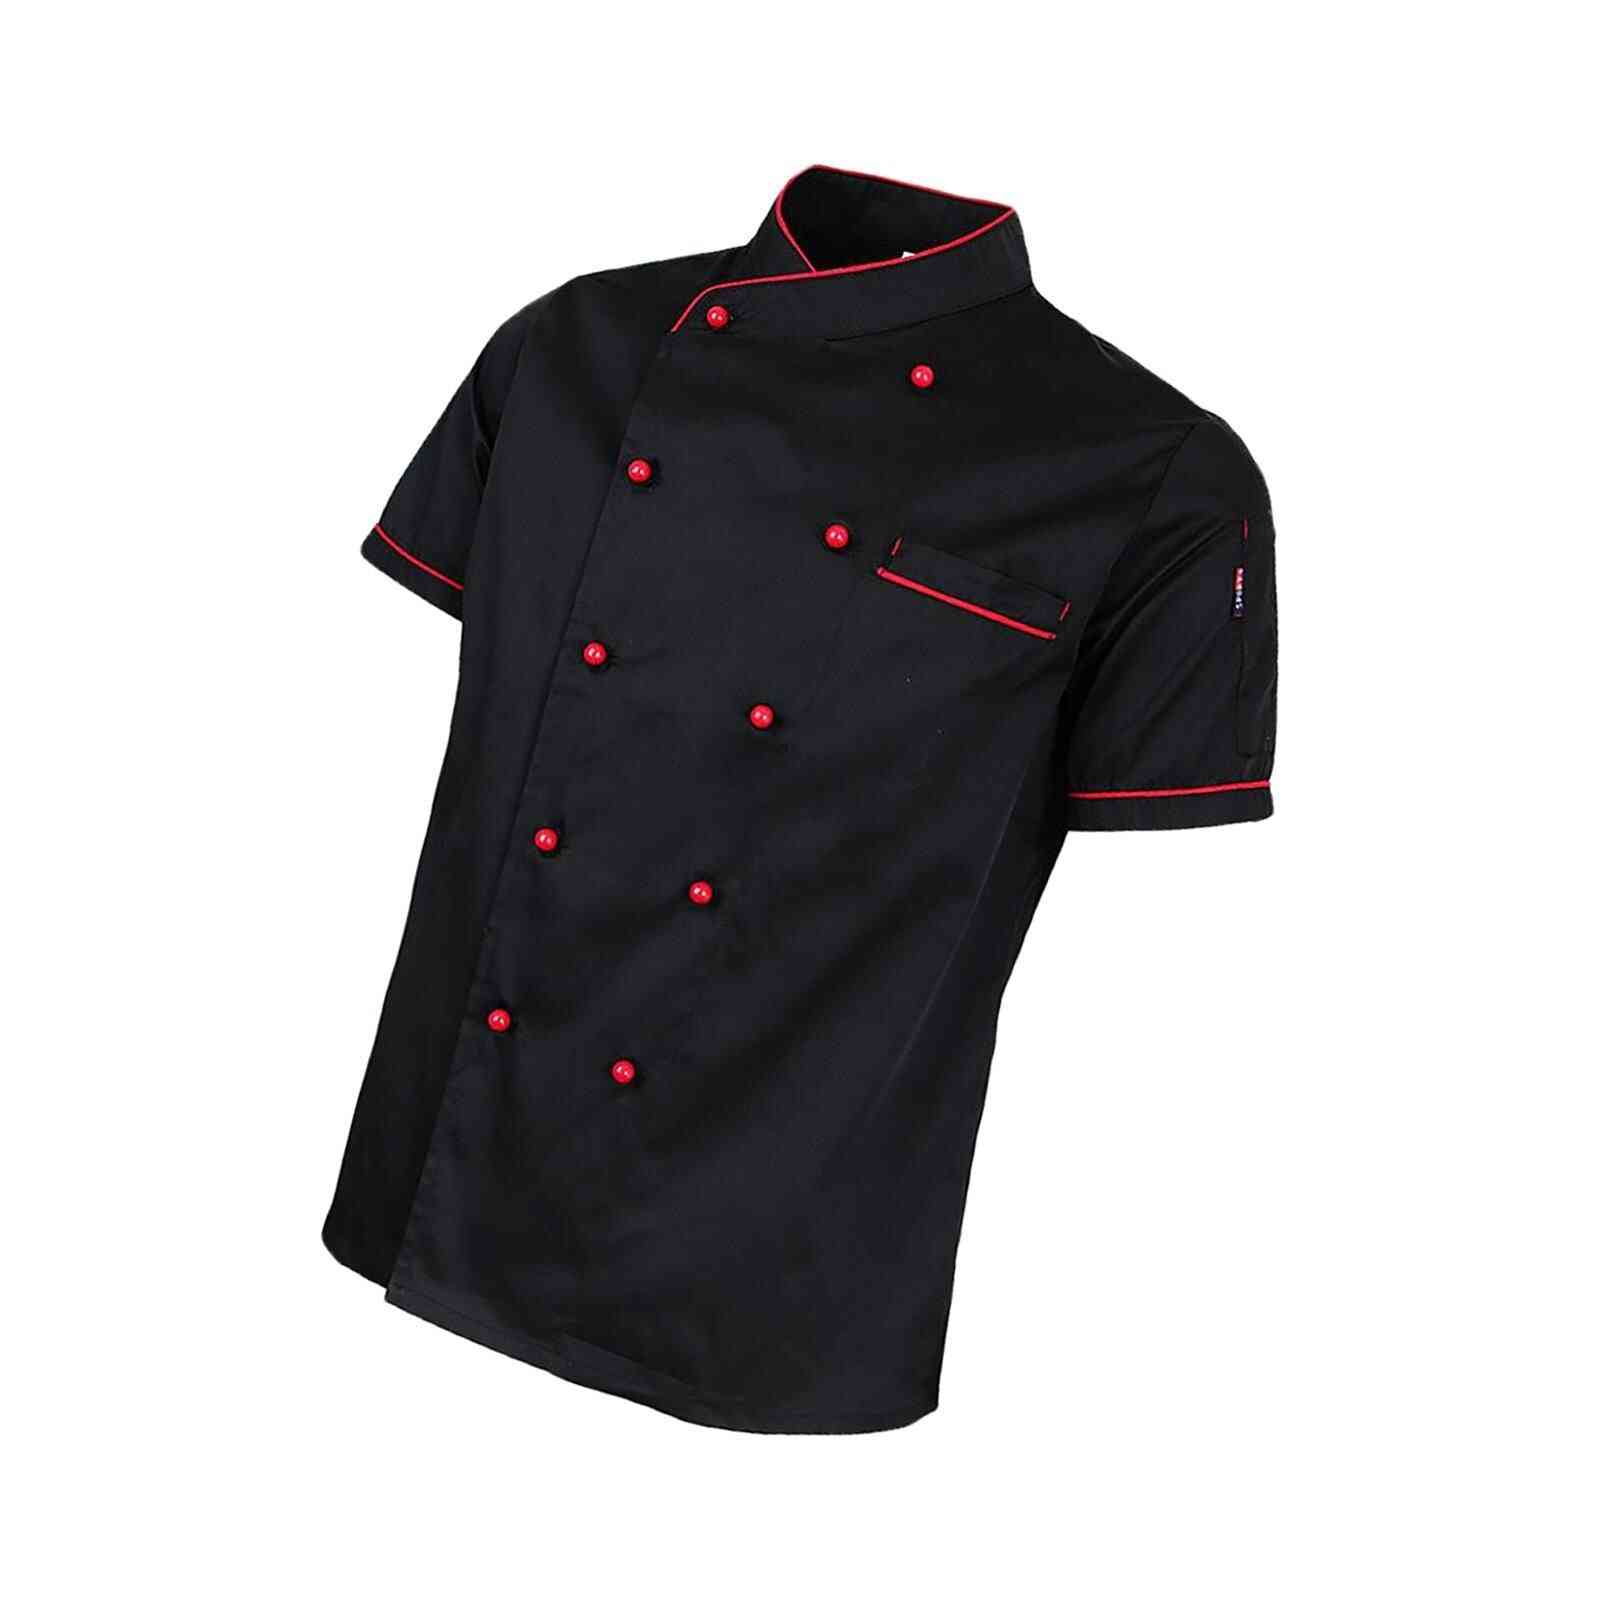 Unisex Chef Jacket Food Service Short Sleeve Breathable Executive Uniform